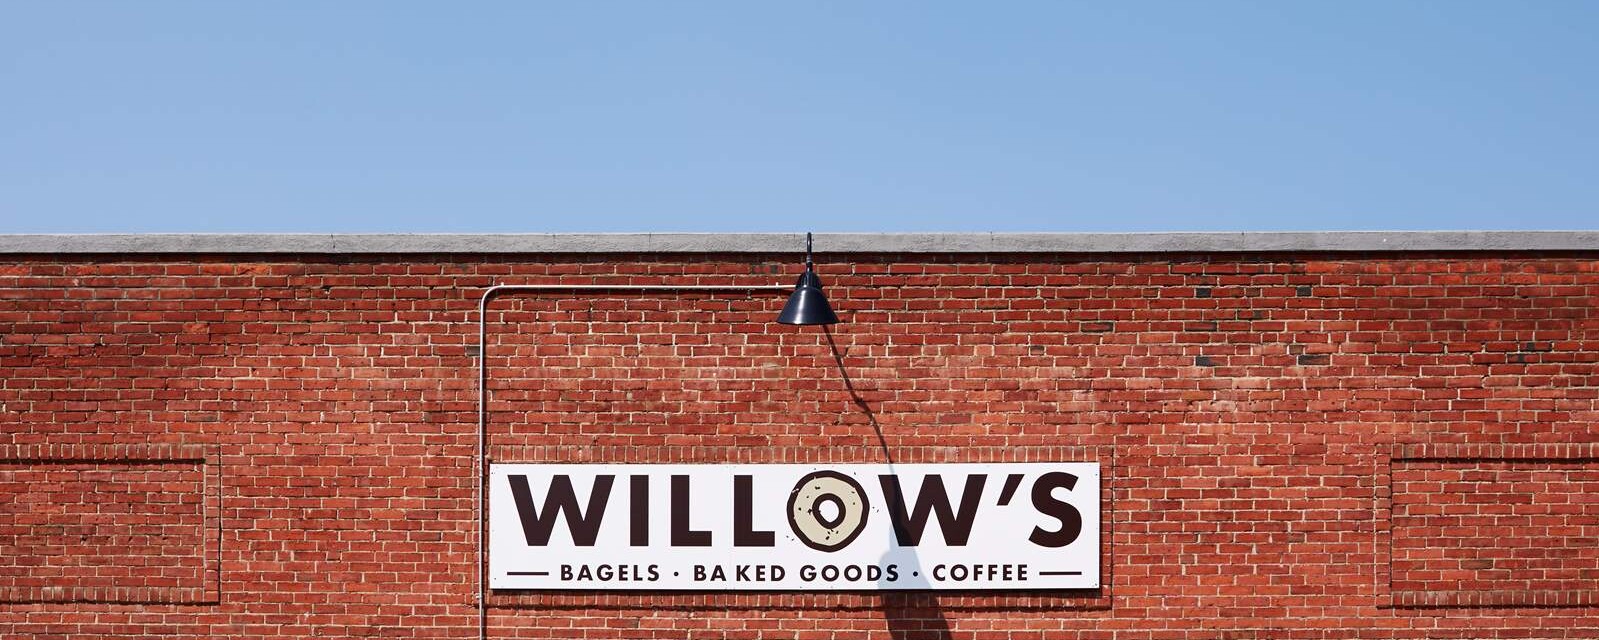 Willow's Bagels